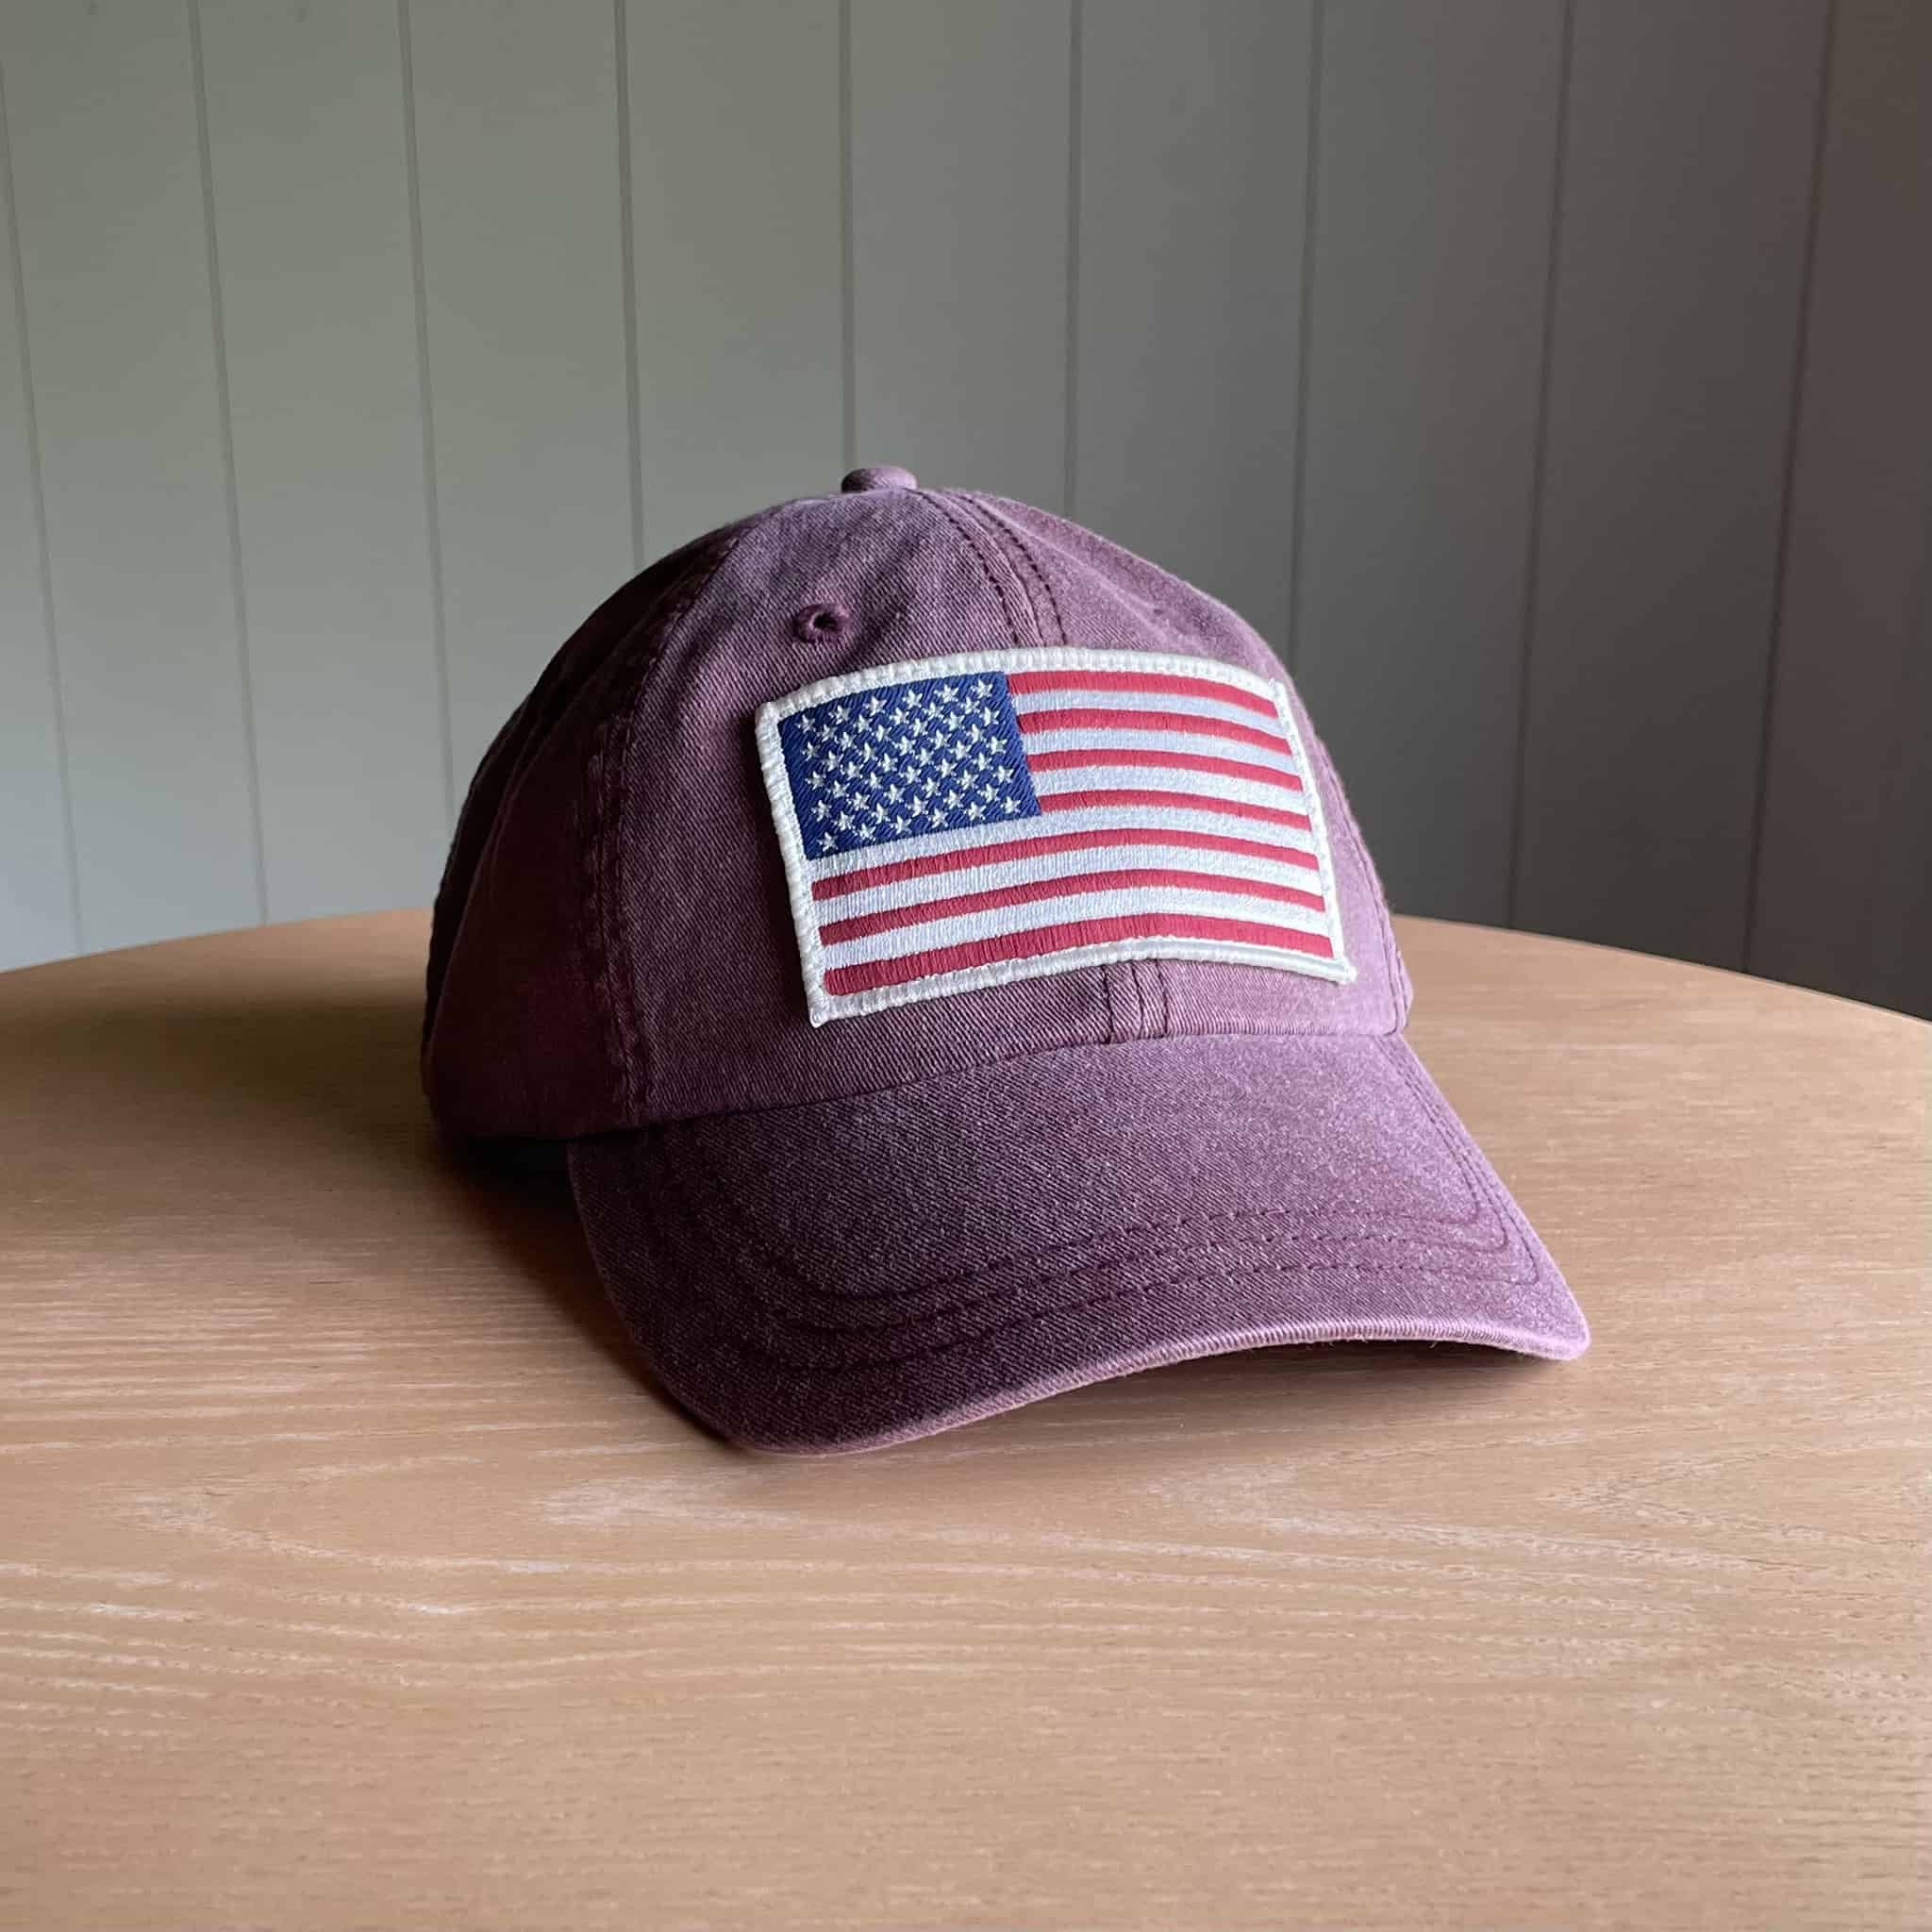 American flag custom patch hat.jpg